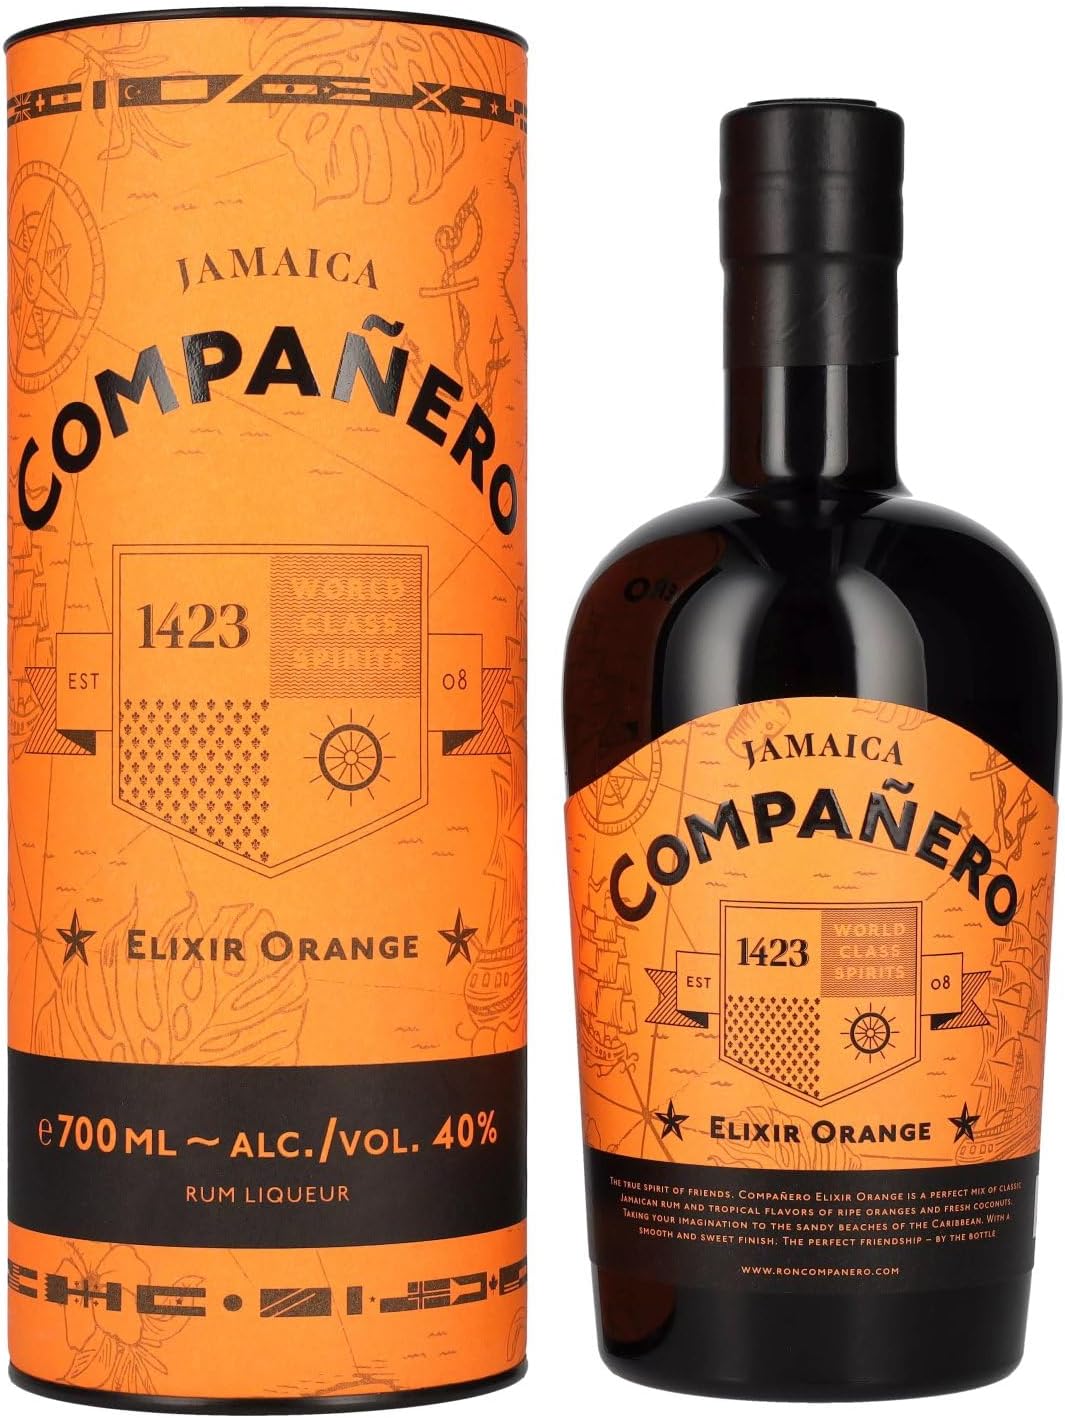 Ron Compañero Elixir Orange Rum